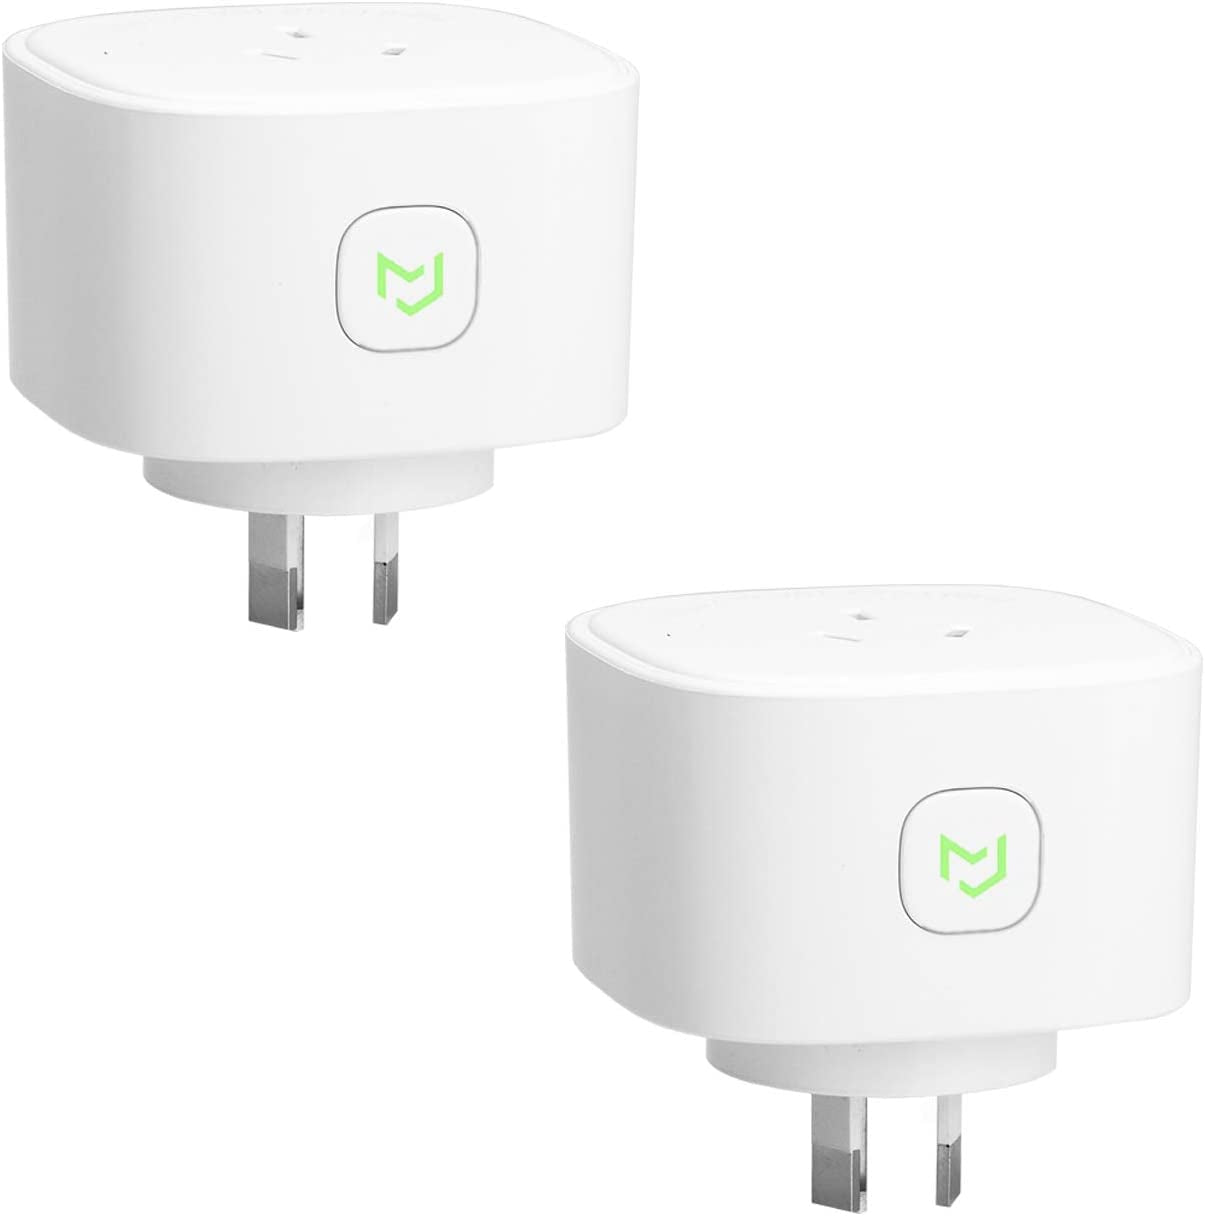 meross, Meross Smart Plug Wifi Outlet with Energy Monitor, 2 Piece